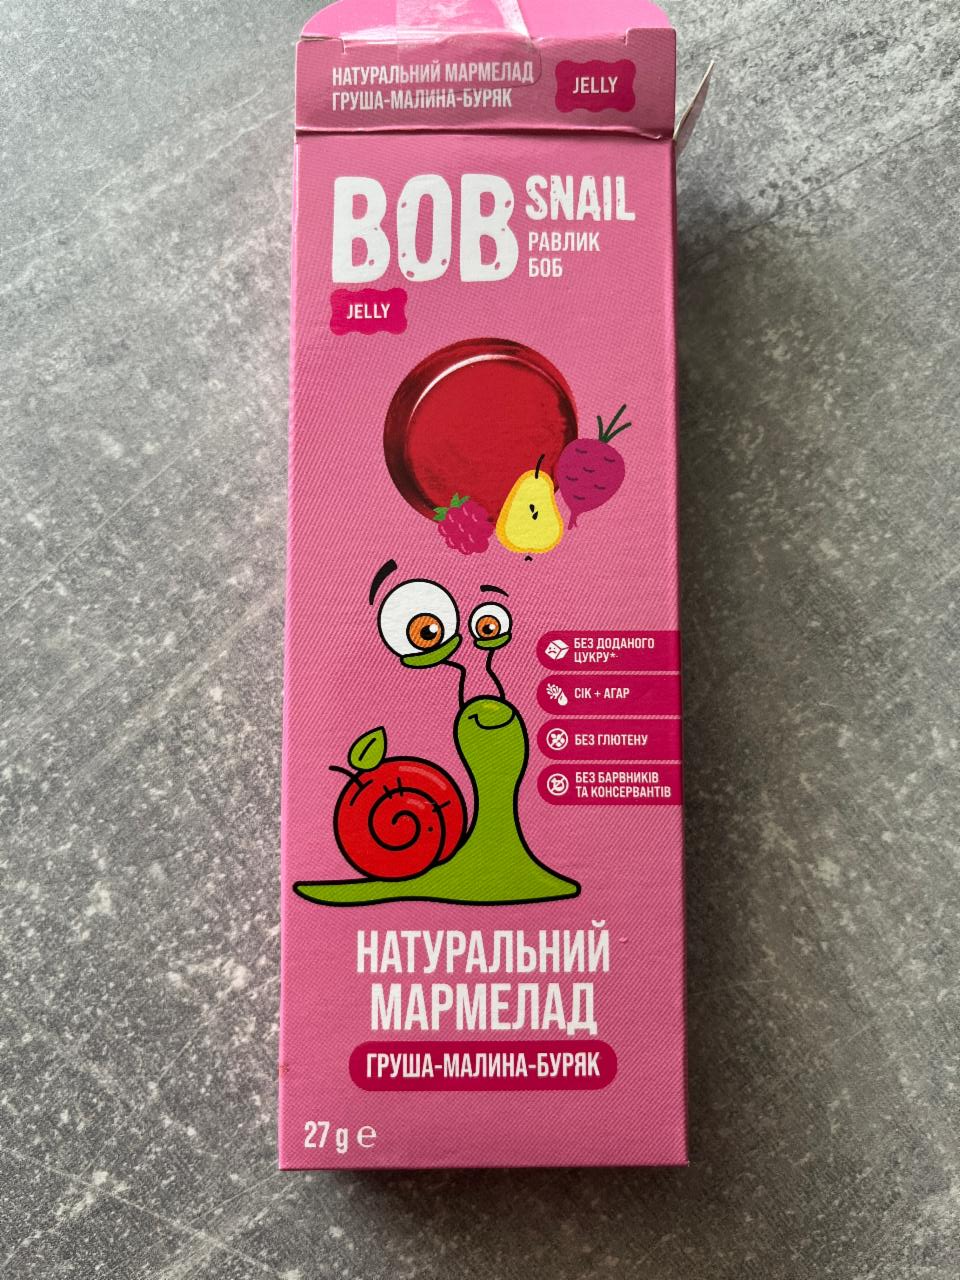 Фото - Мармелад фруктово-ягодно-овощной Груша-Малина-свекла Bob Snail